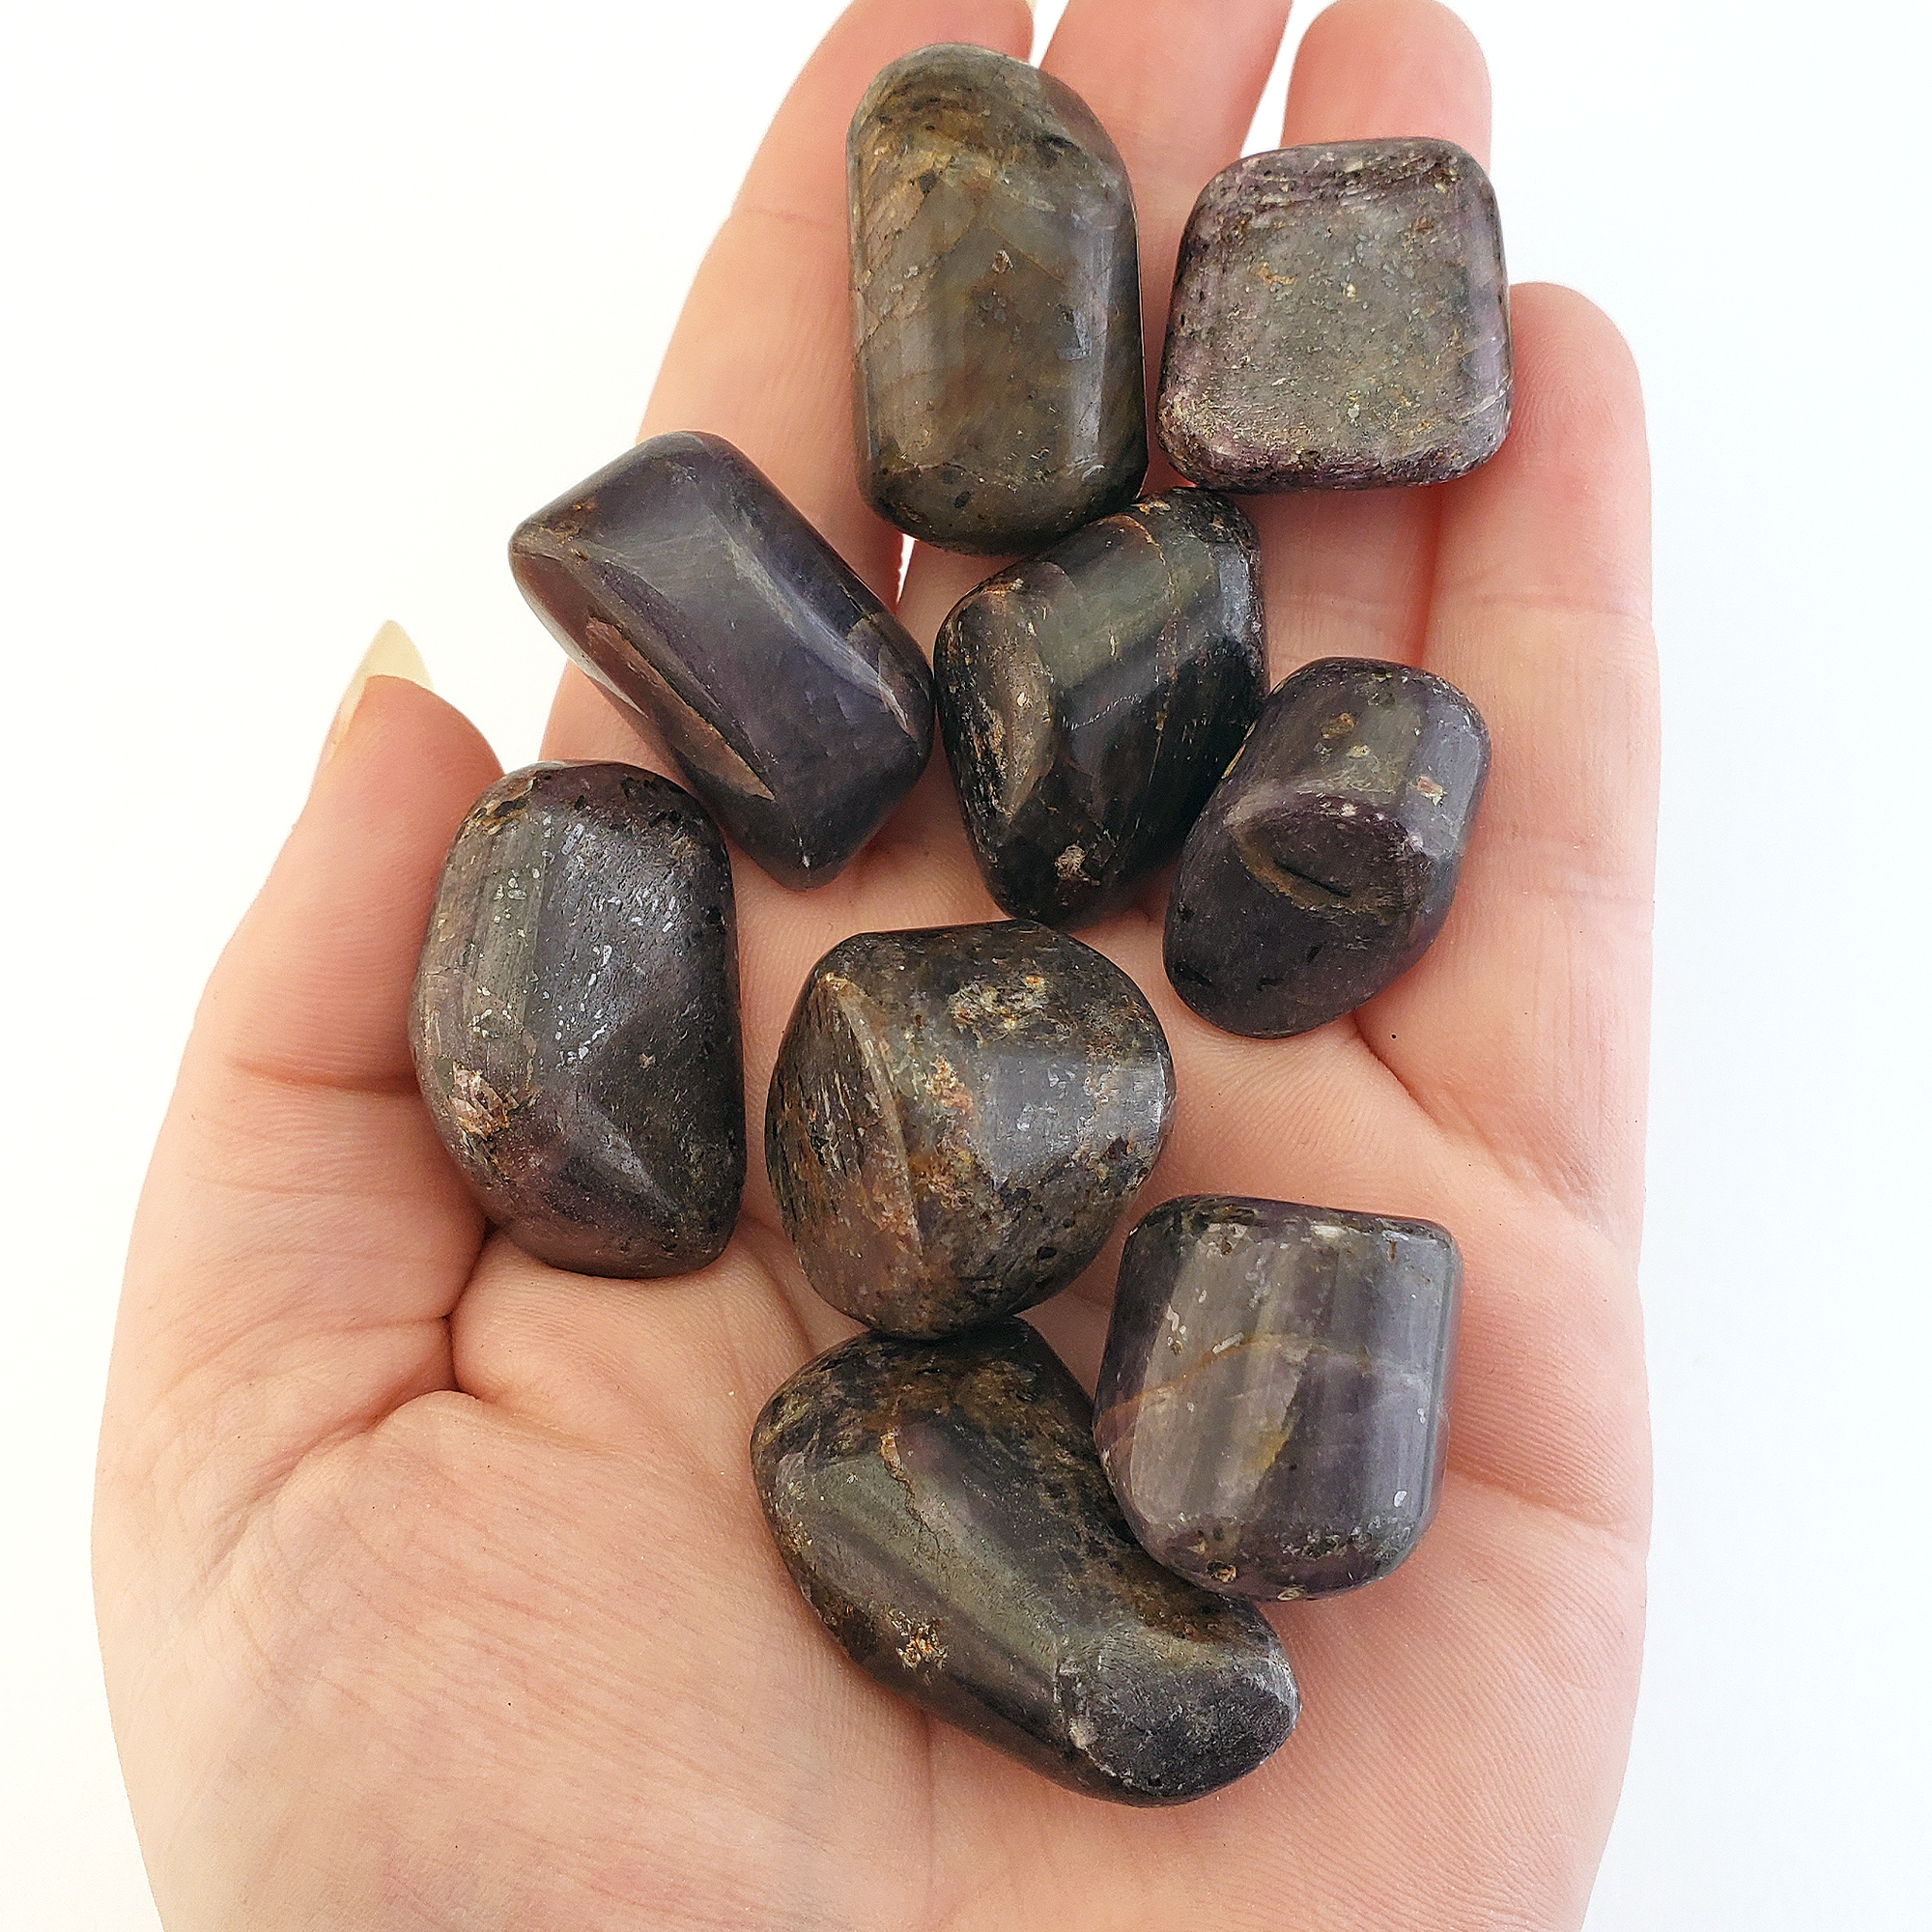 Ruby Corundum Natural Tumbled Gemstone - One Stone - Stones in Hand on White Background